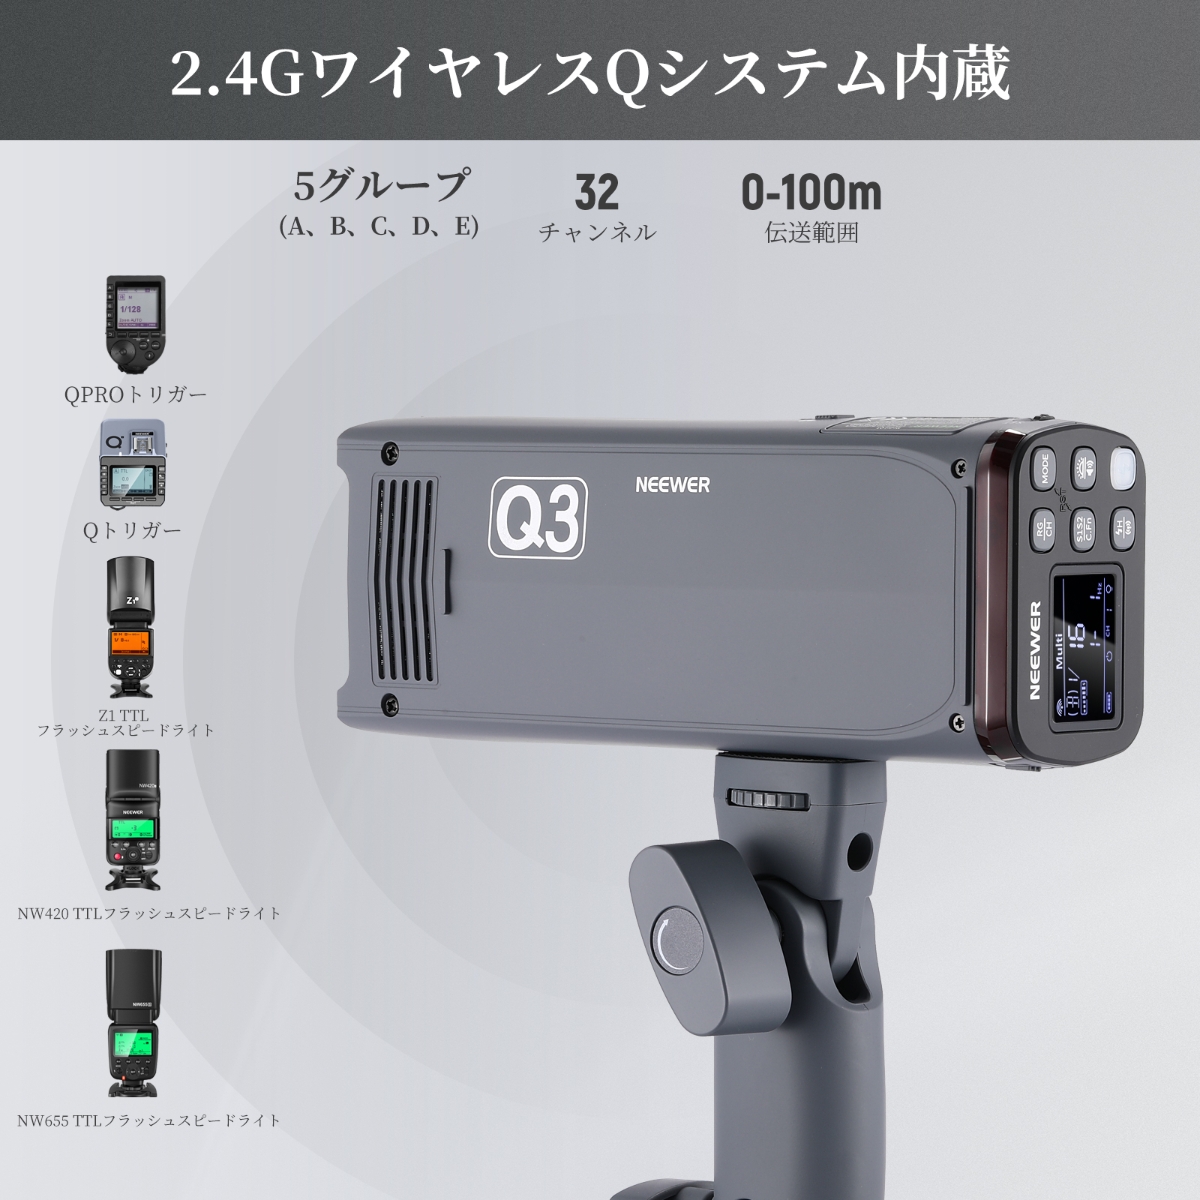 NEEWER JAPAN 公式サイト|プロ写真・撮影機材専門店. NEEWER Q3 200W 2.4G TTL ストロボフラッシュ